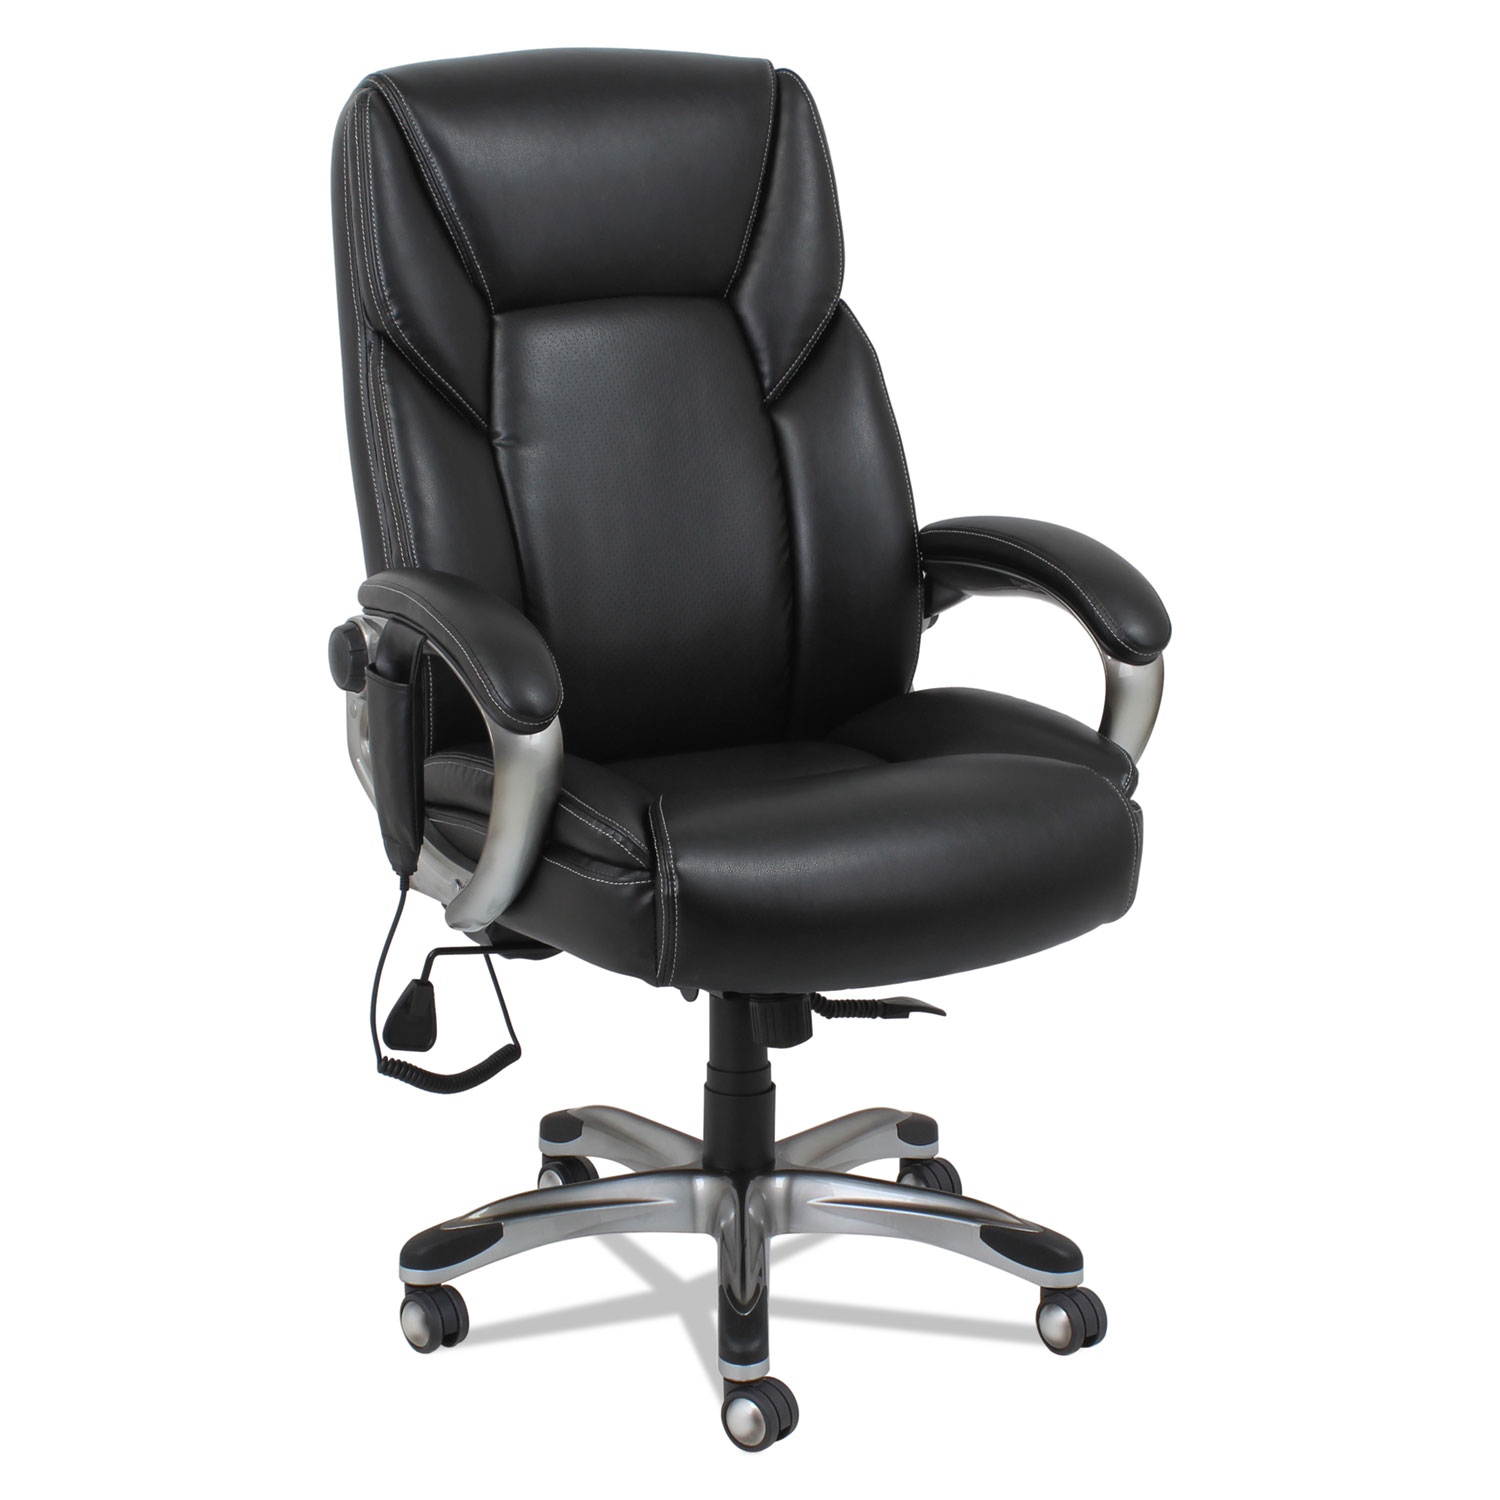  Alera ALESH7119 Shiatsu Massage Chair, Supports up to 275 lbs., Black Seat/Black Back, Silver Base (ALESH7119) 